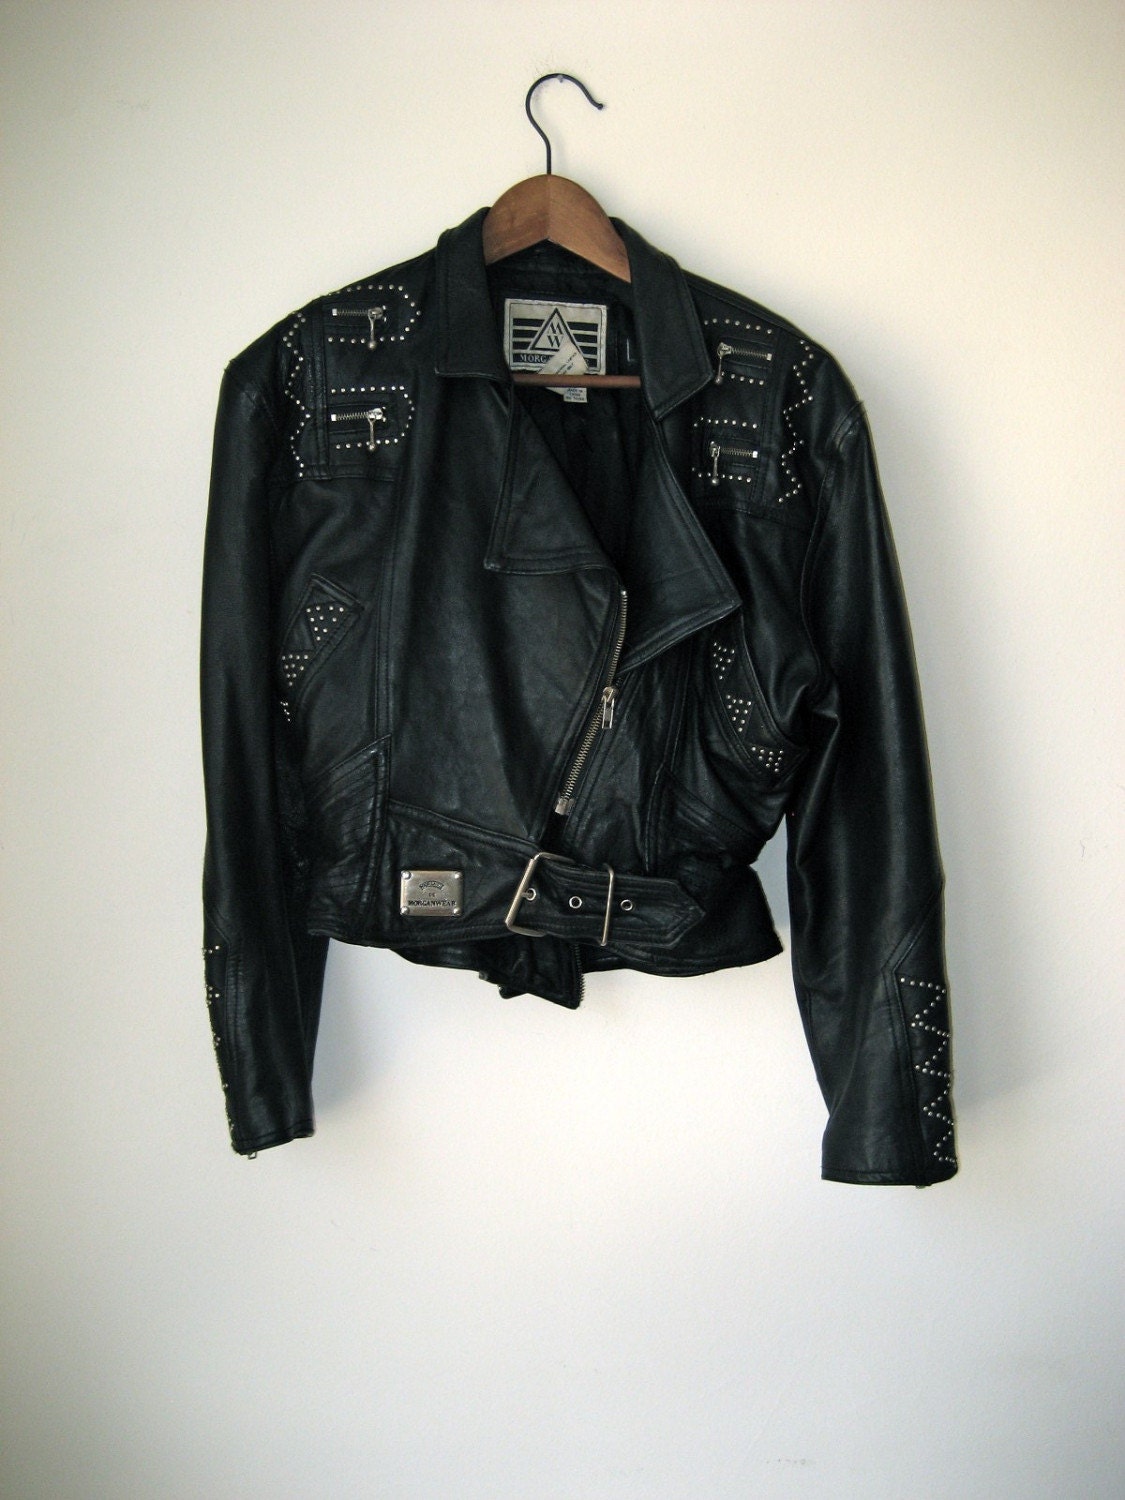 Incredible 80's Leather Jacket